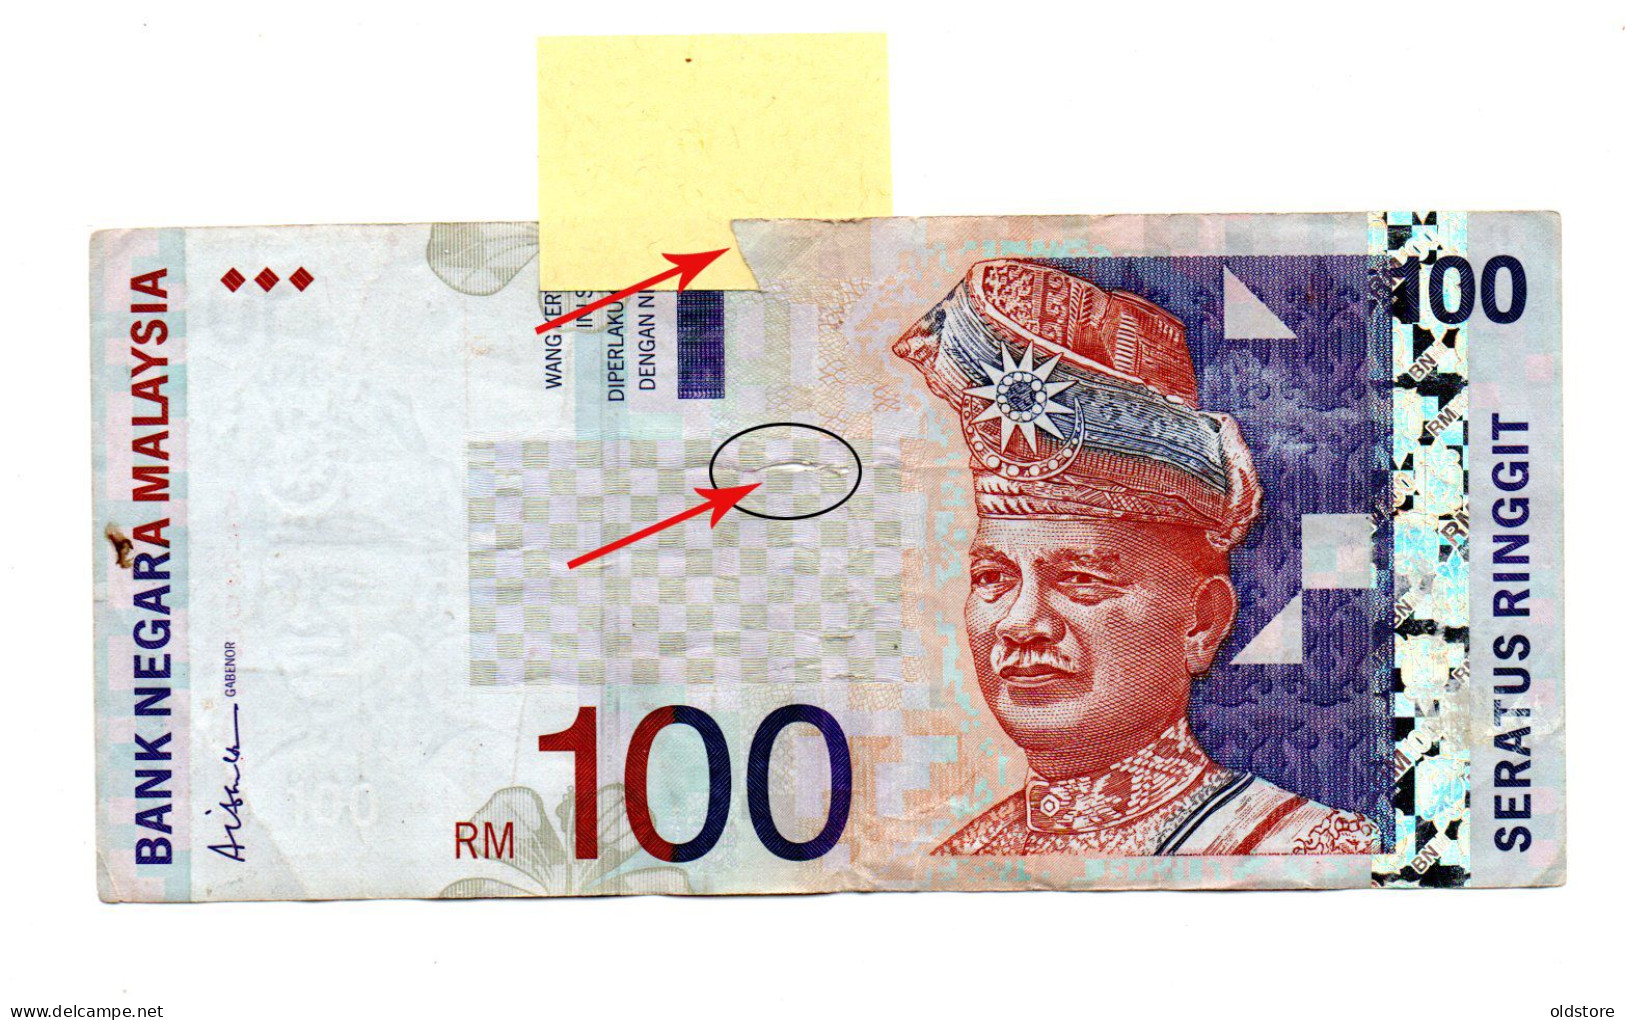 Malaysia - Banknotes 1 - 10 - 50 - 100 Ringgit -  Set 4 Pcs - Malaysie